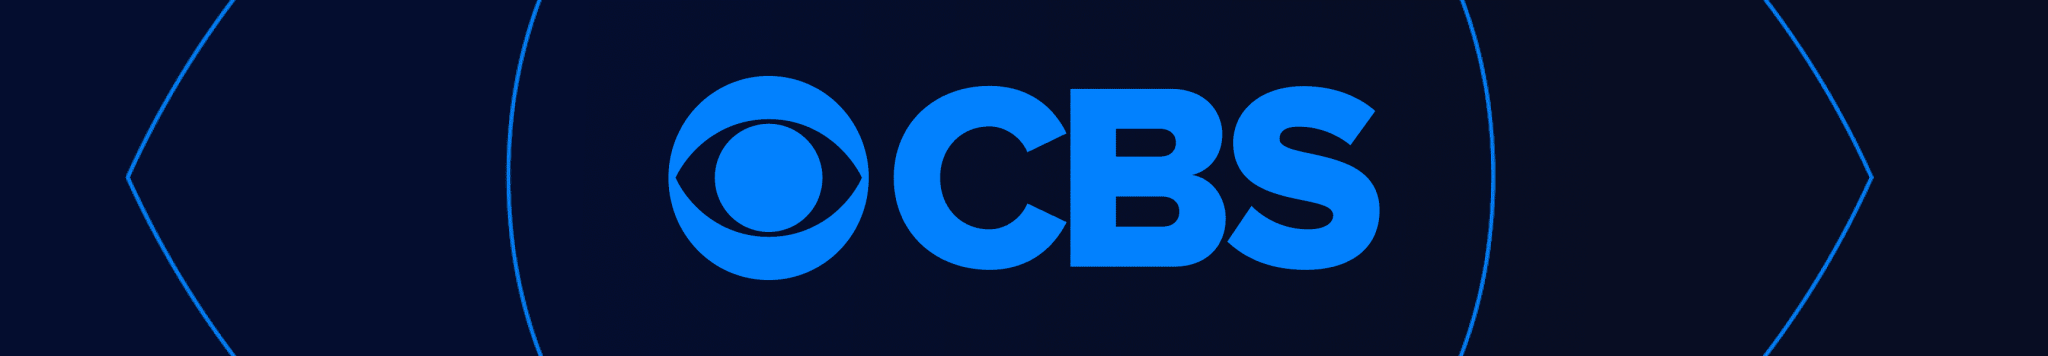 CBS Entertainment Mantas